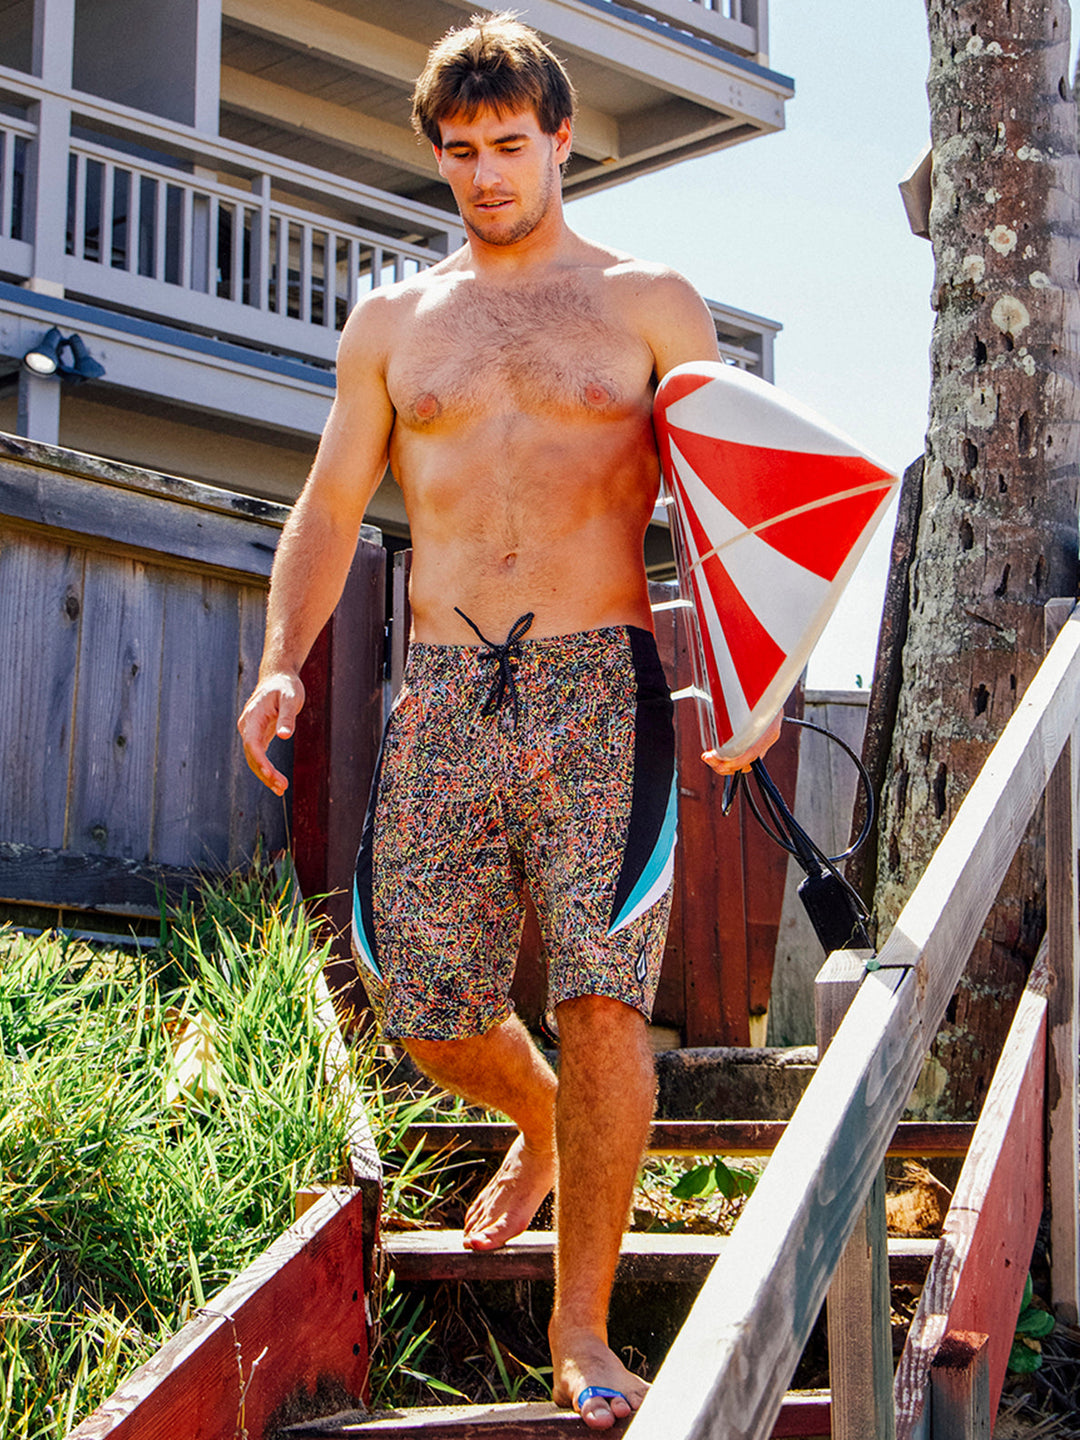 Volcom SURF VITALS JACK ROBINSON MOD-TECH TRUNKS - BLACK - Sun Diego Boardshop